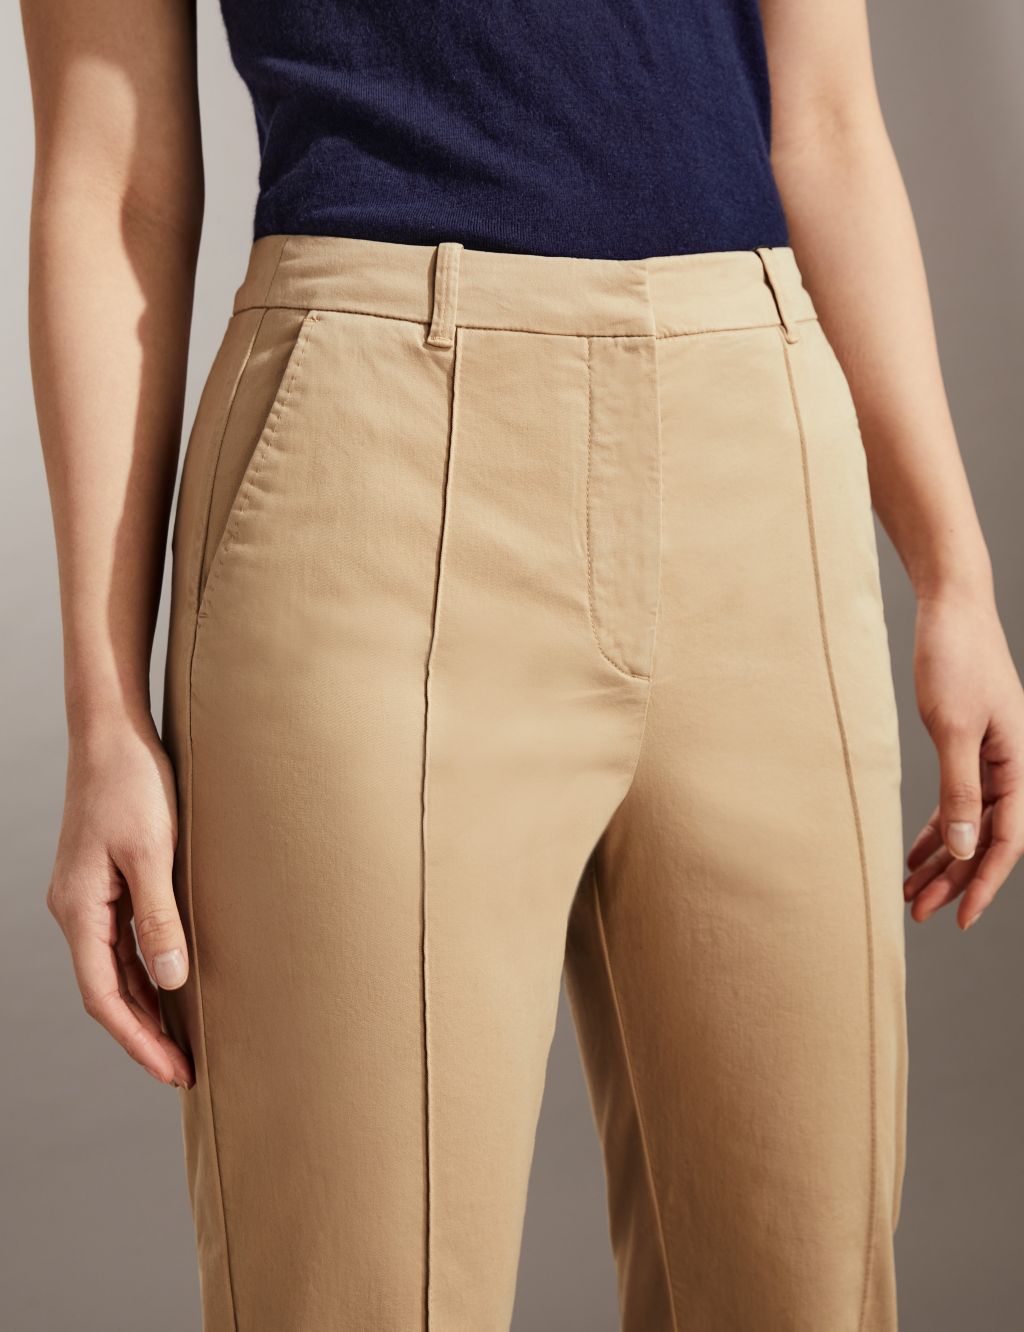 Mehrang Womens Trouser Pants/Slimfit Regular Wear Chinos Pants for Women